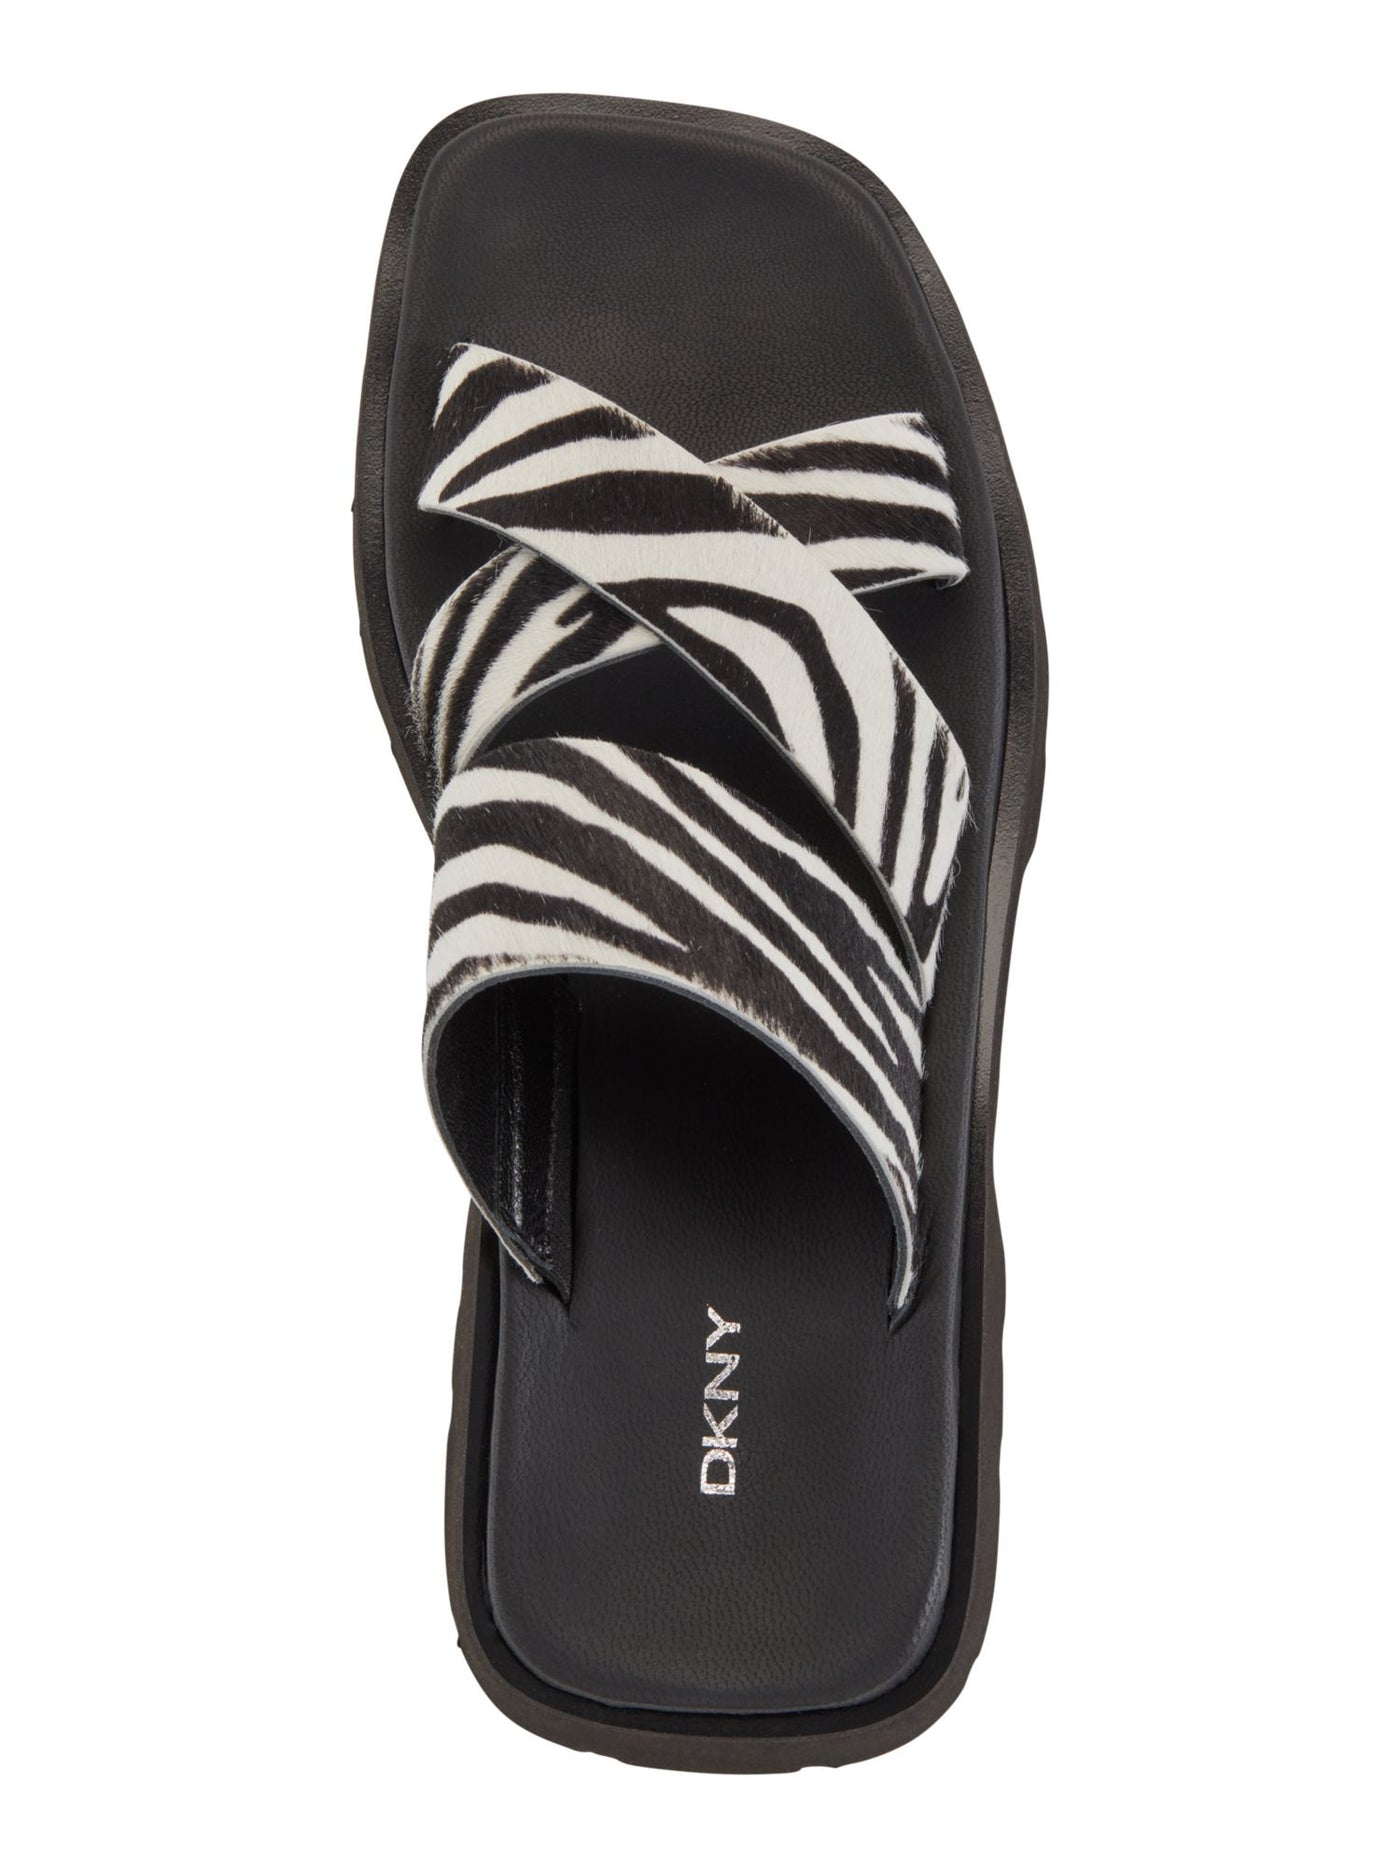 DKNY Womens Black Animal Print 1-1/2" Platform Comfort Rydel Open Toe Block Heel Slip On Leather Sandals Shoes 7